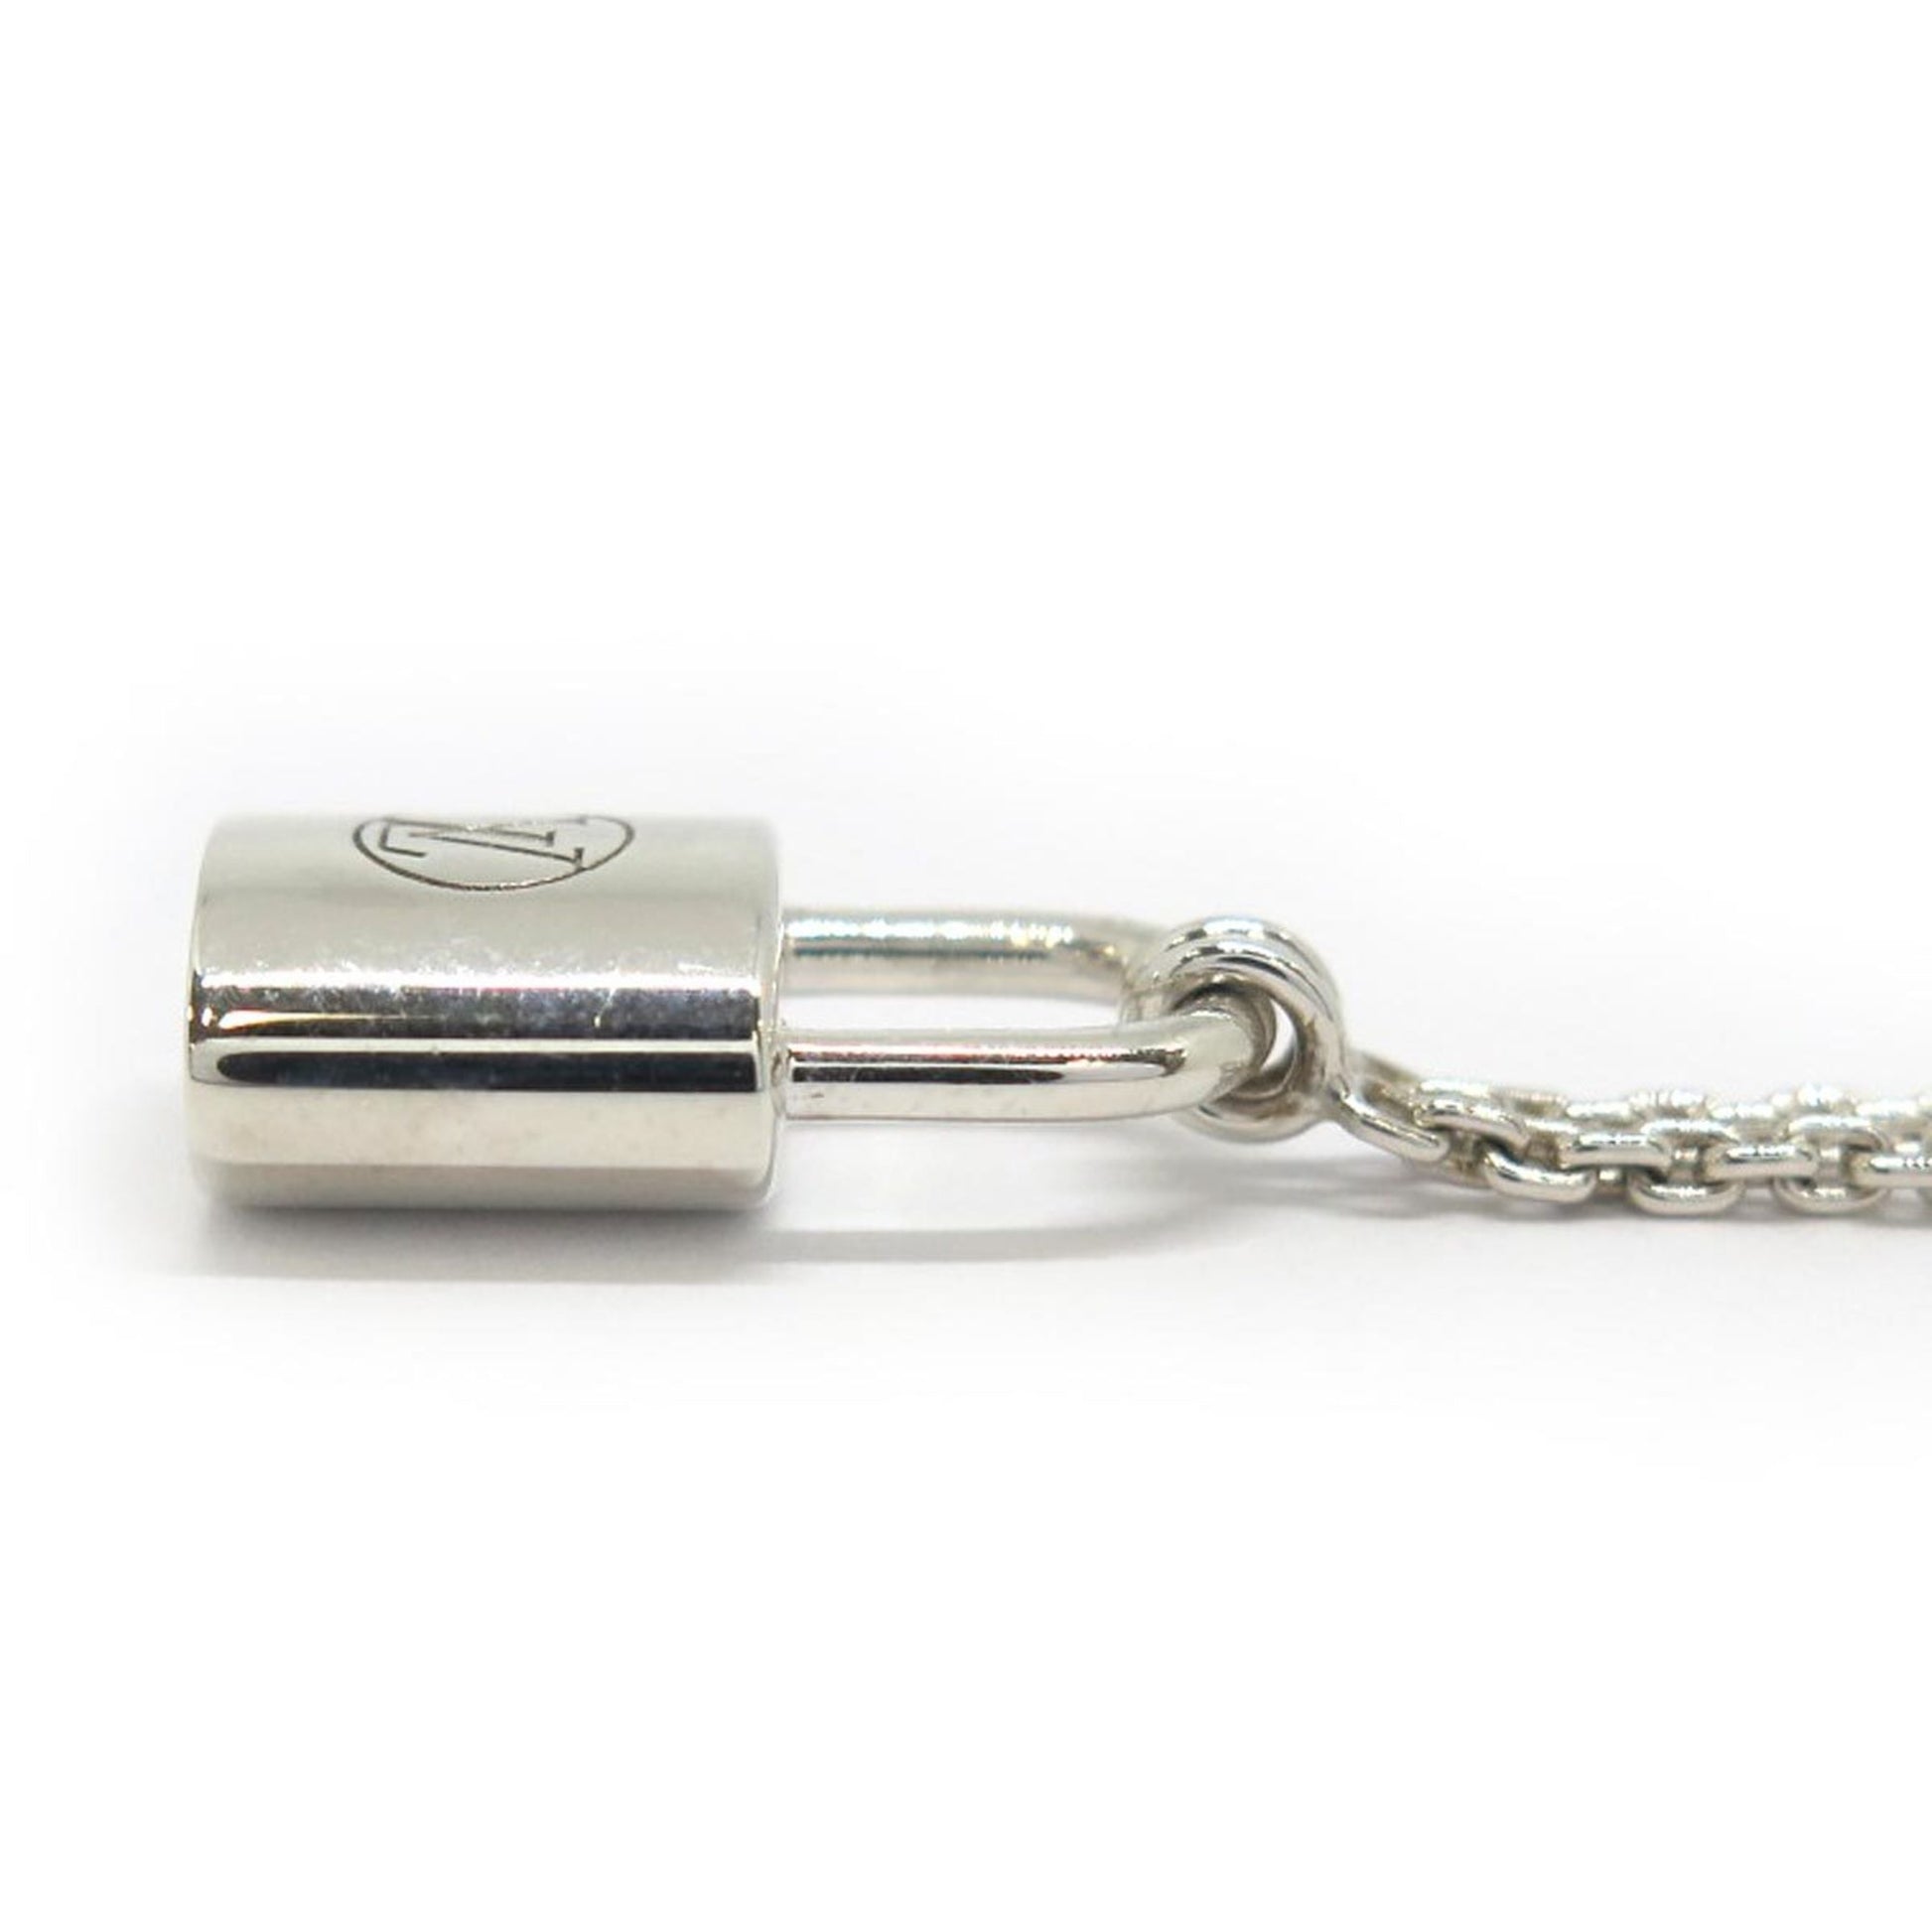 Louis Vuitton Silver lockit pendant, sterling silver (Q93559